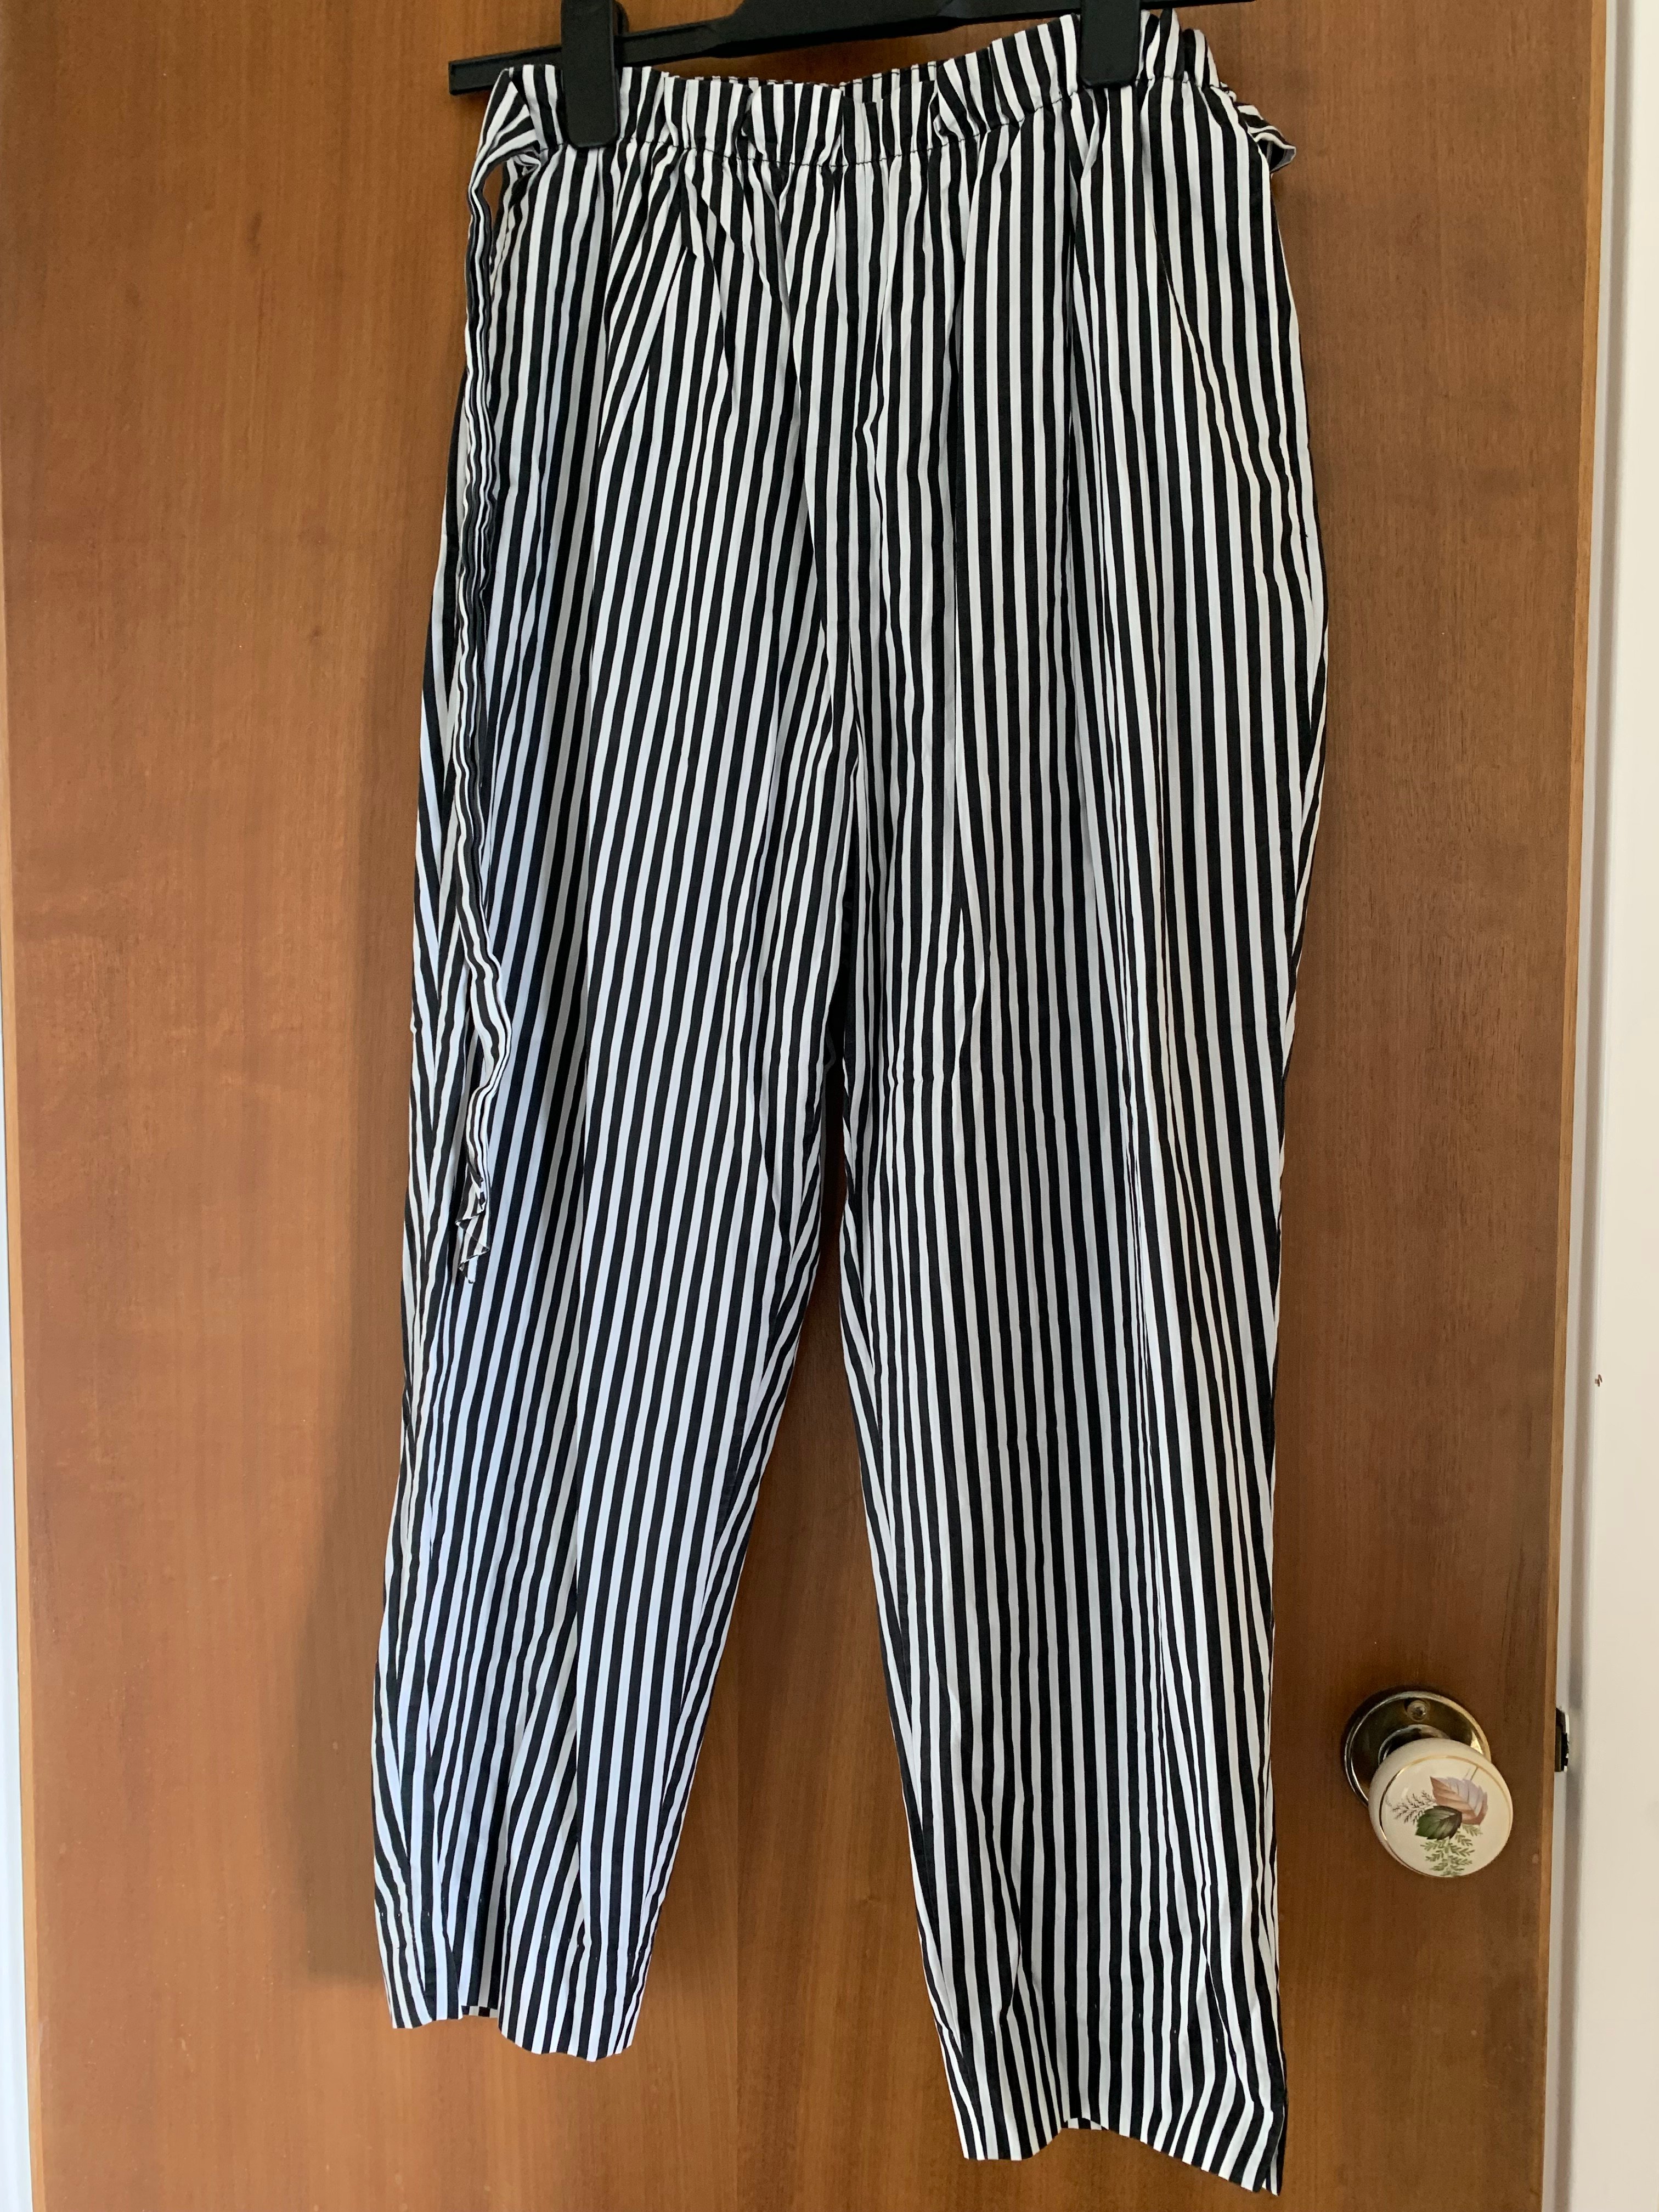 Zara black and white stripey trousers